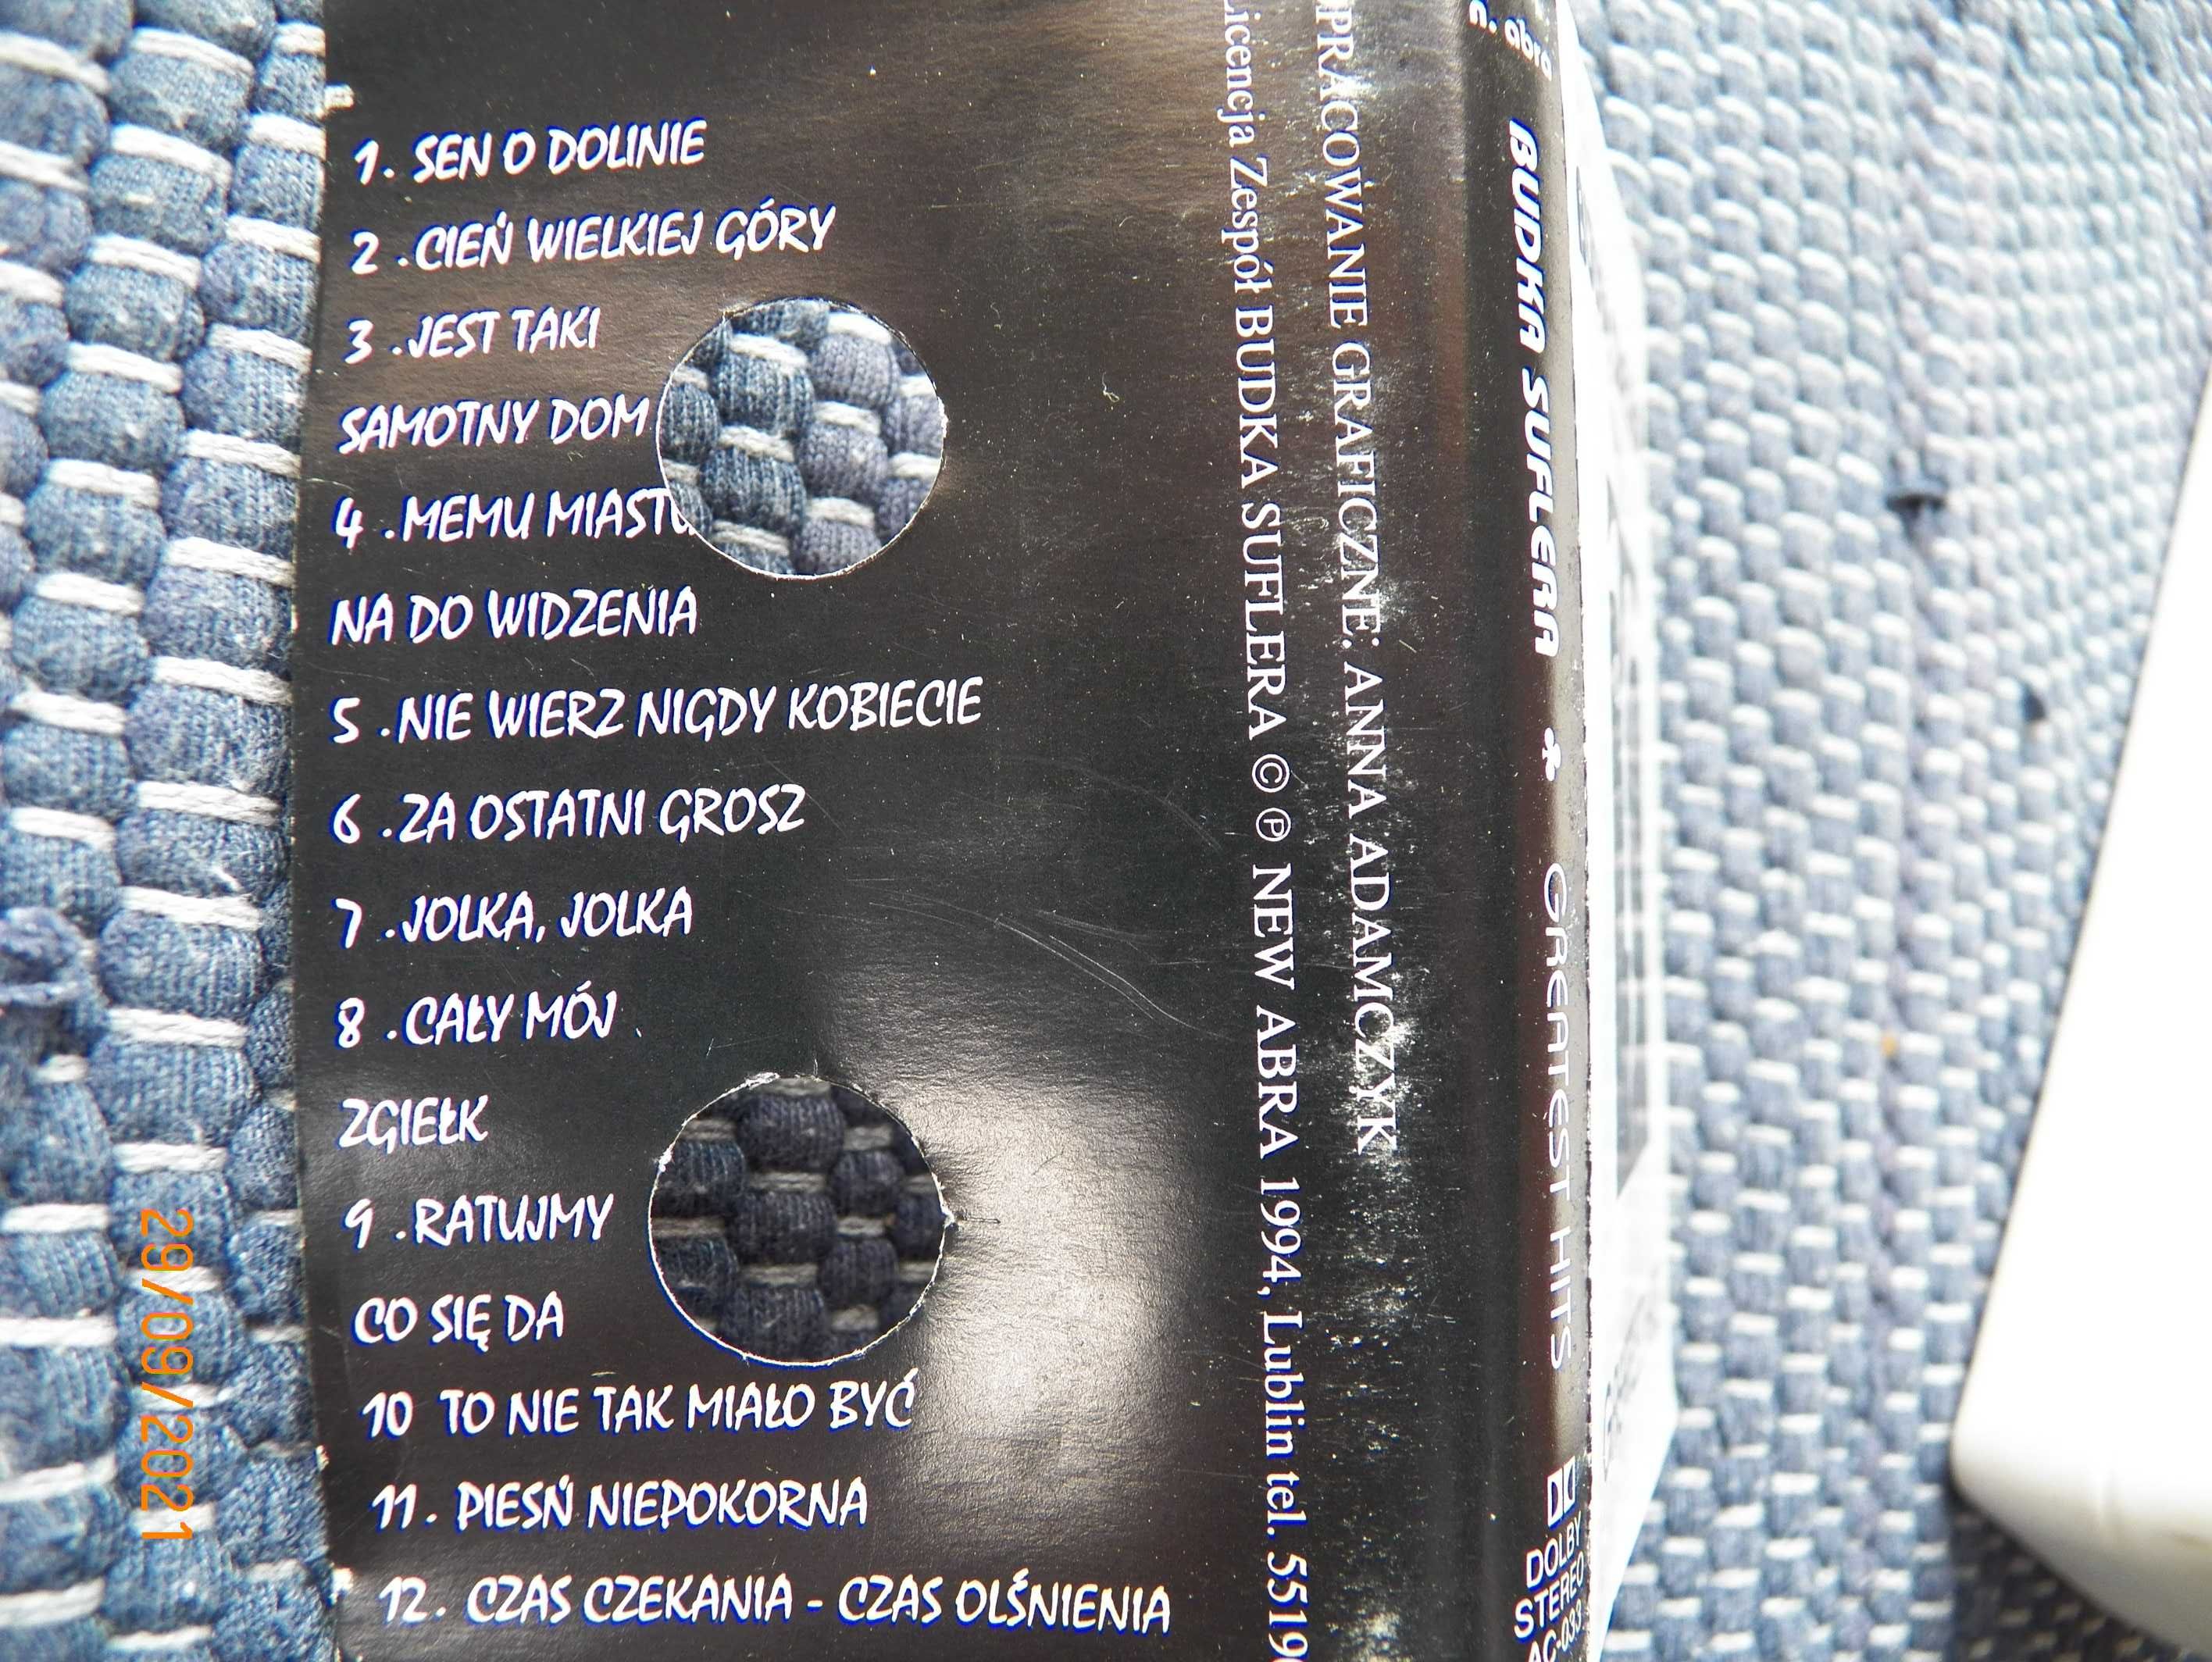 Kaseta magnetofonowa Budka Suflera "Greatest Hits" 1994r.